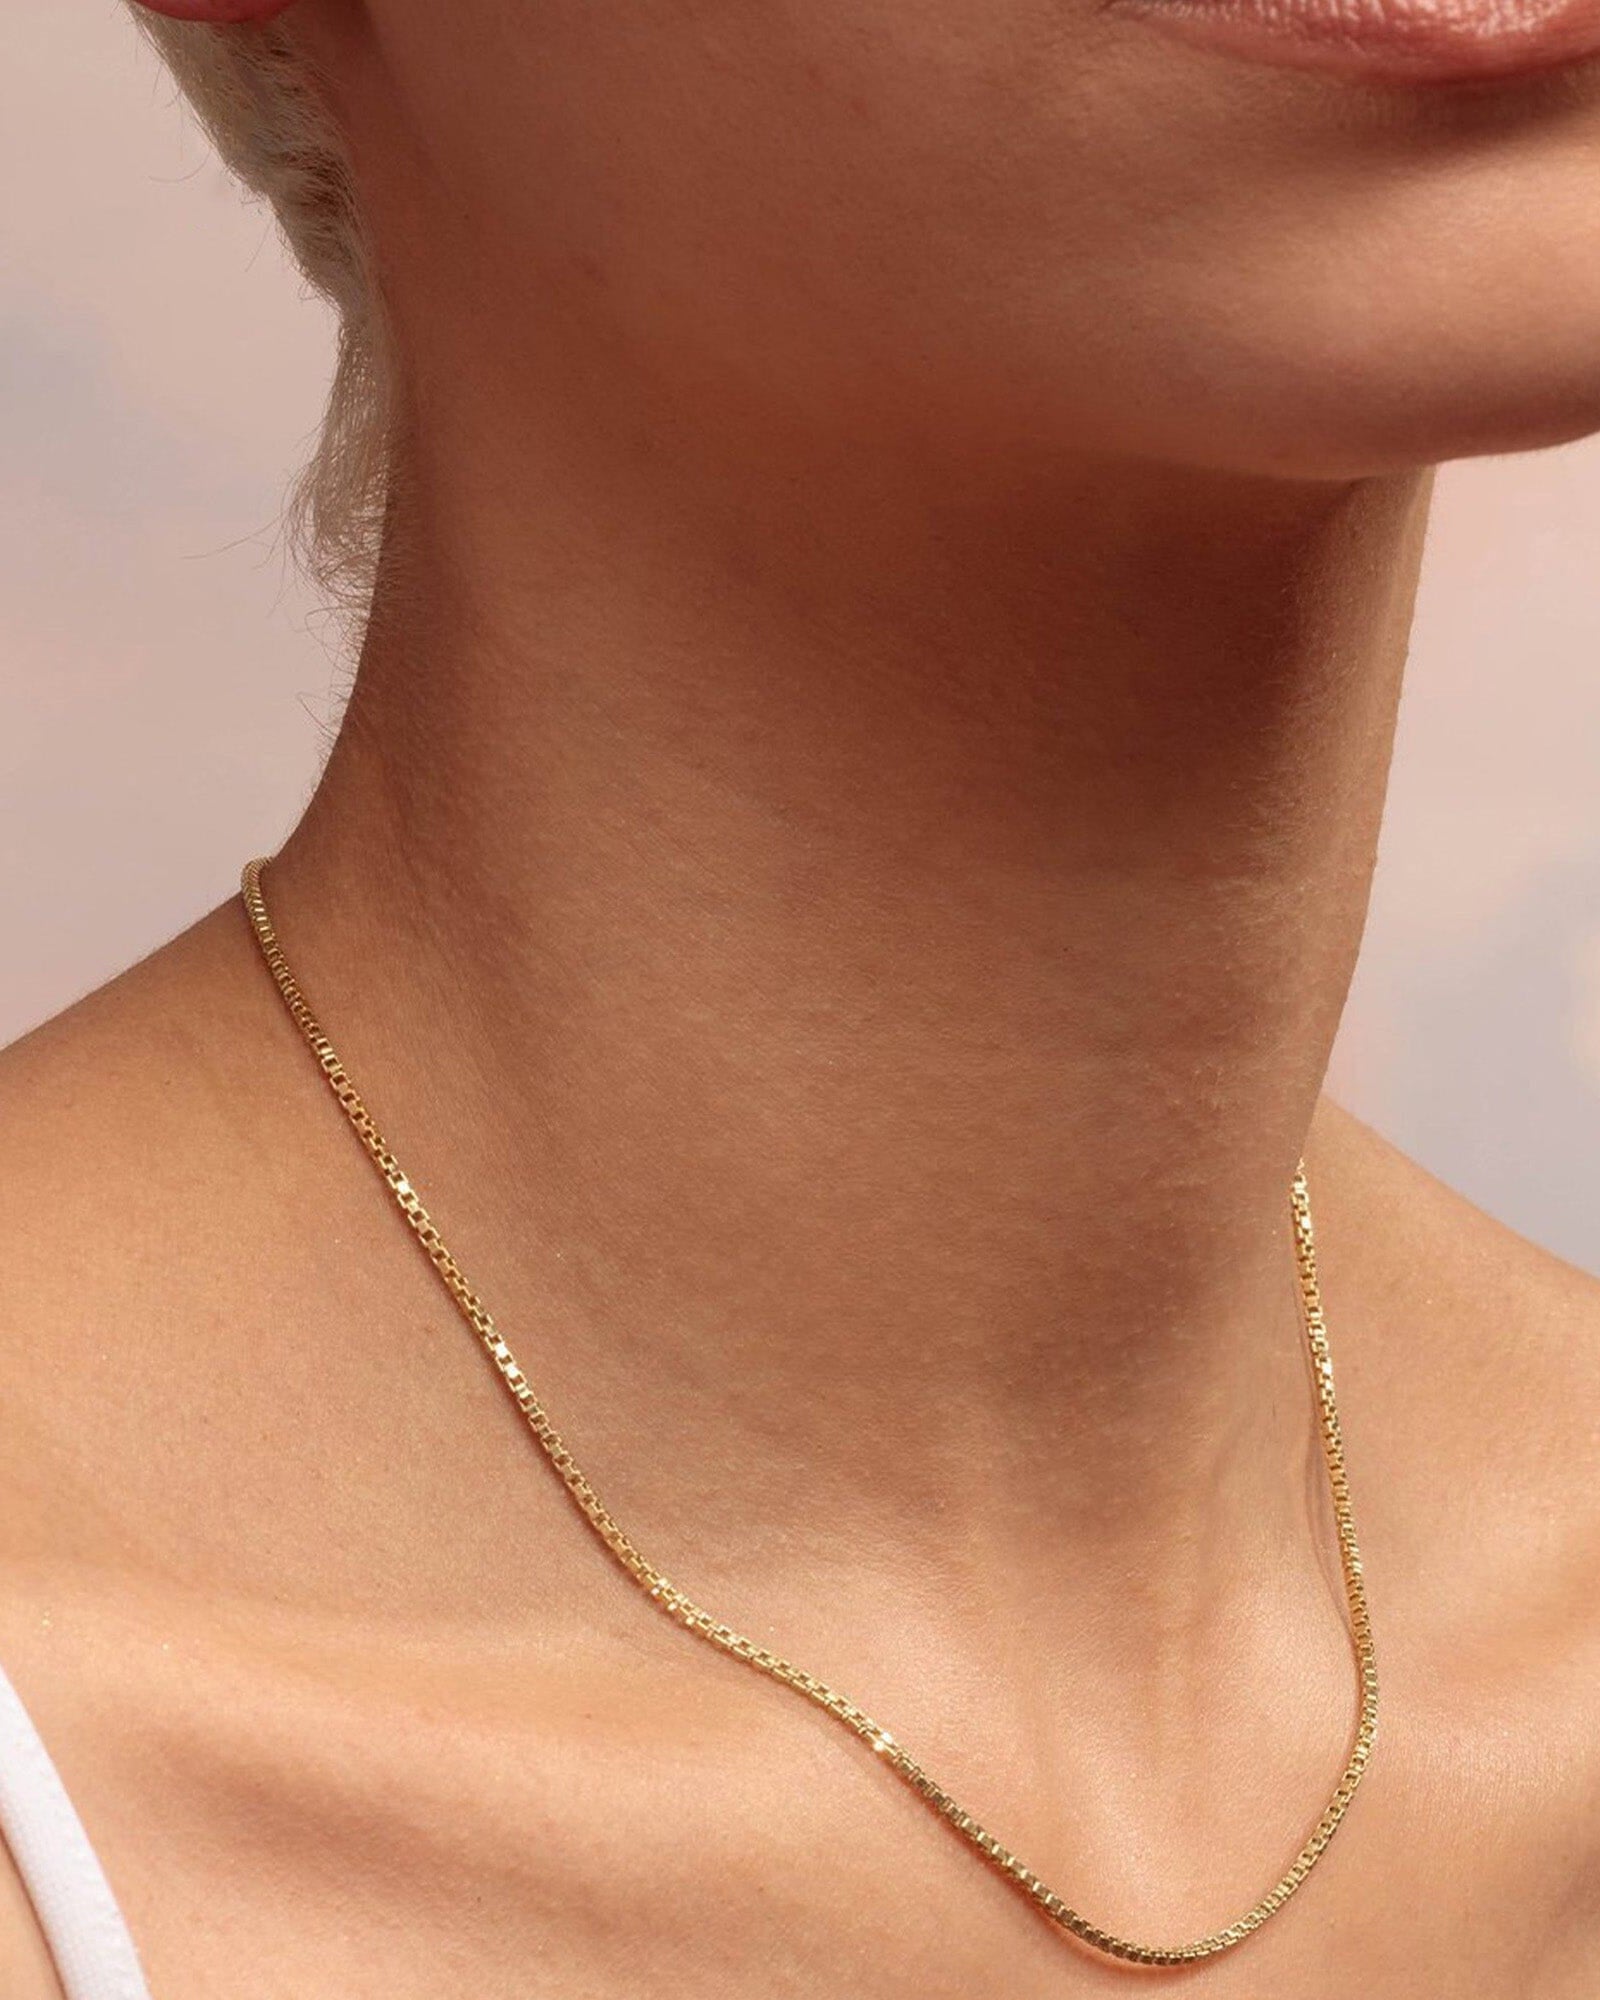 Box Chain Necklace - 18K Gold Vermeil Chains magal-dev 